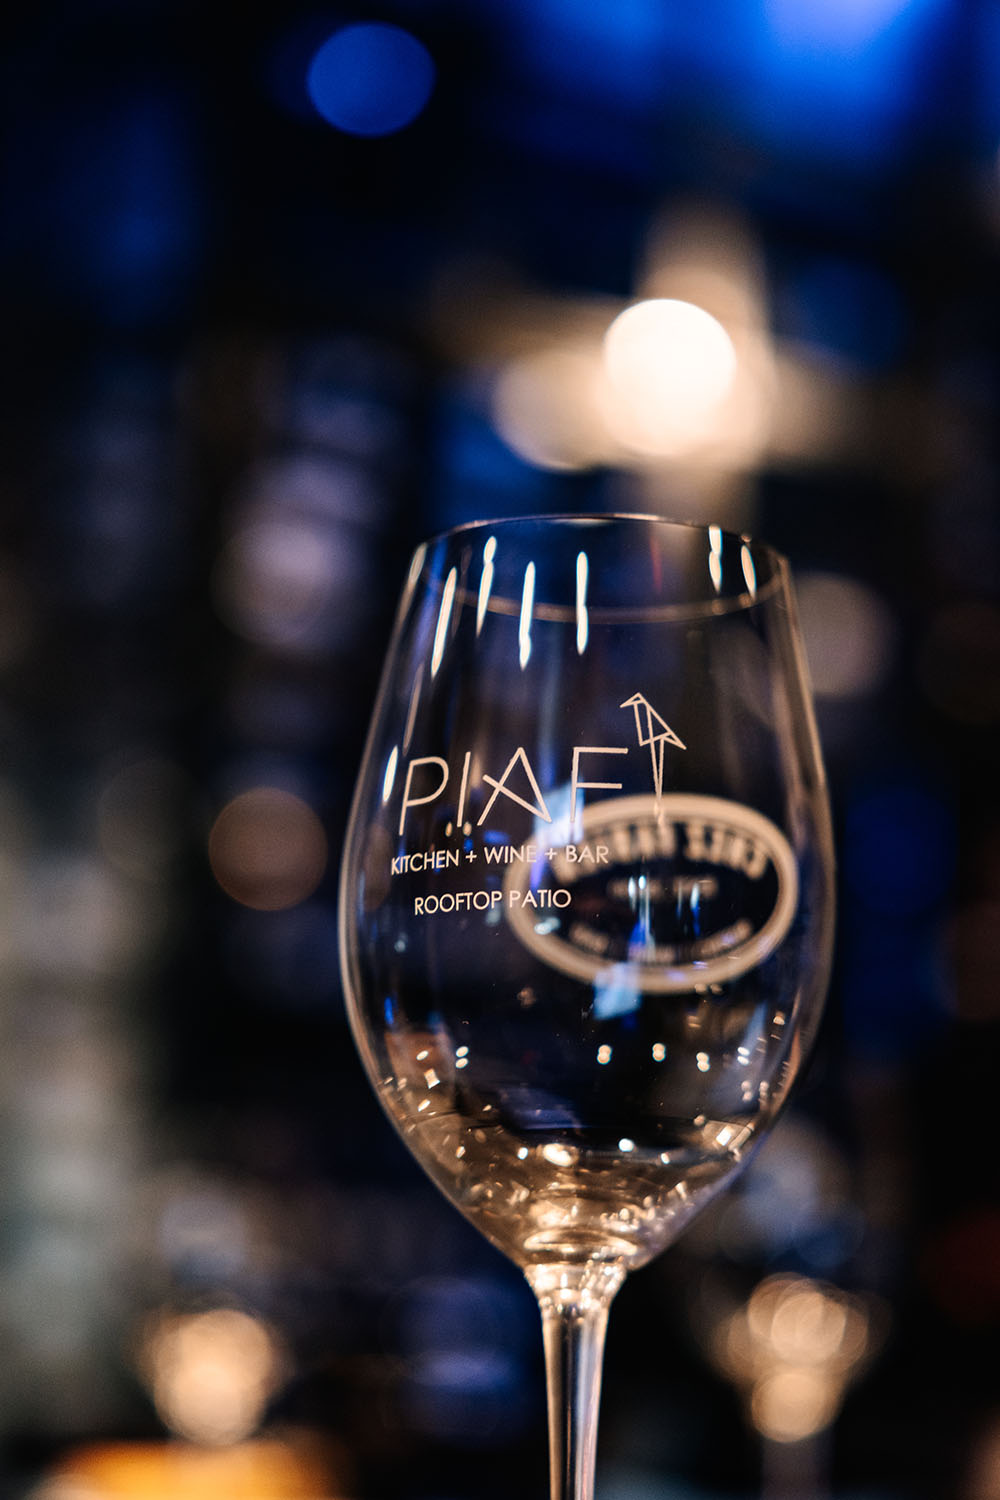 piaf wine glass in stylish photo shot